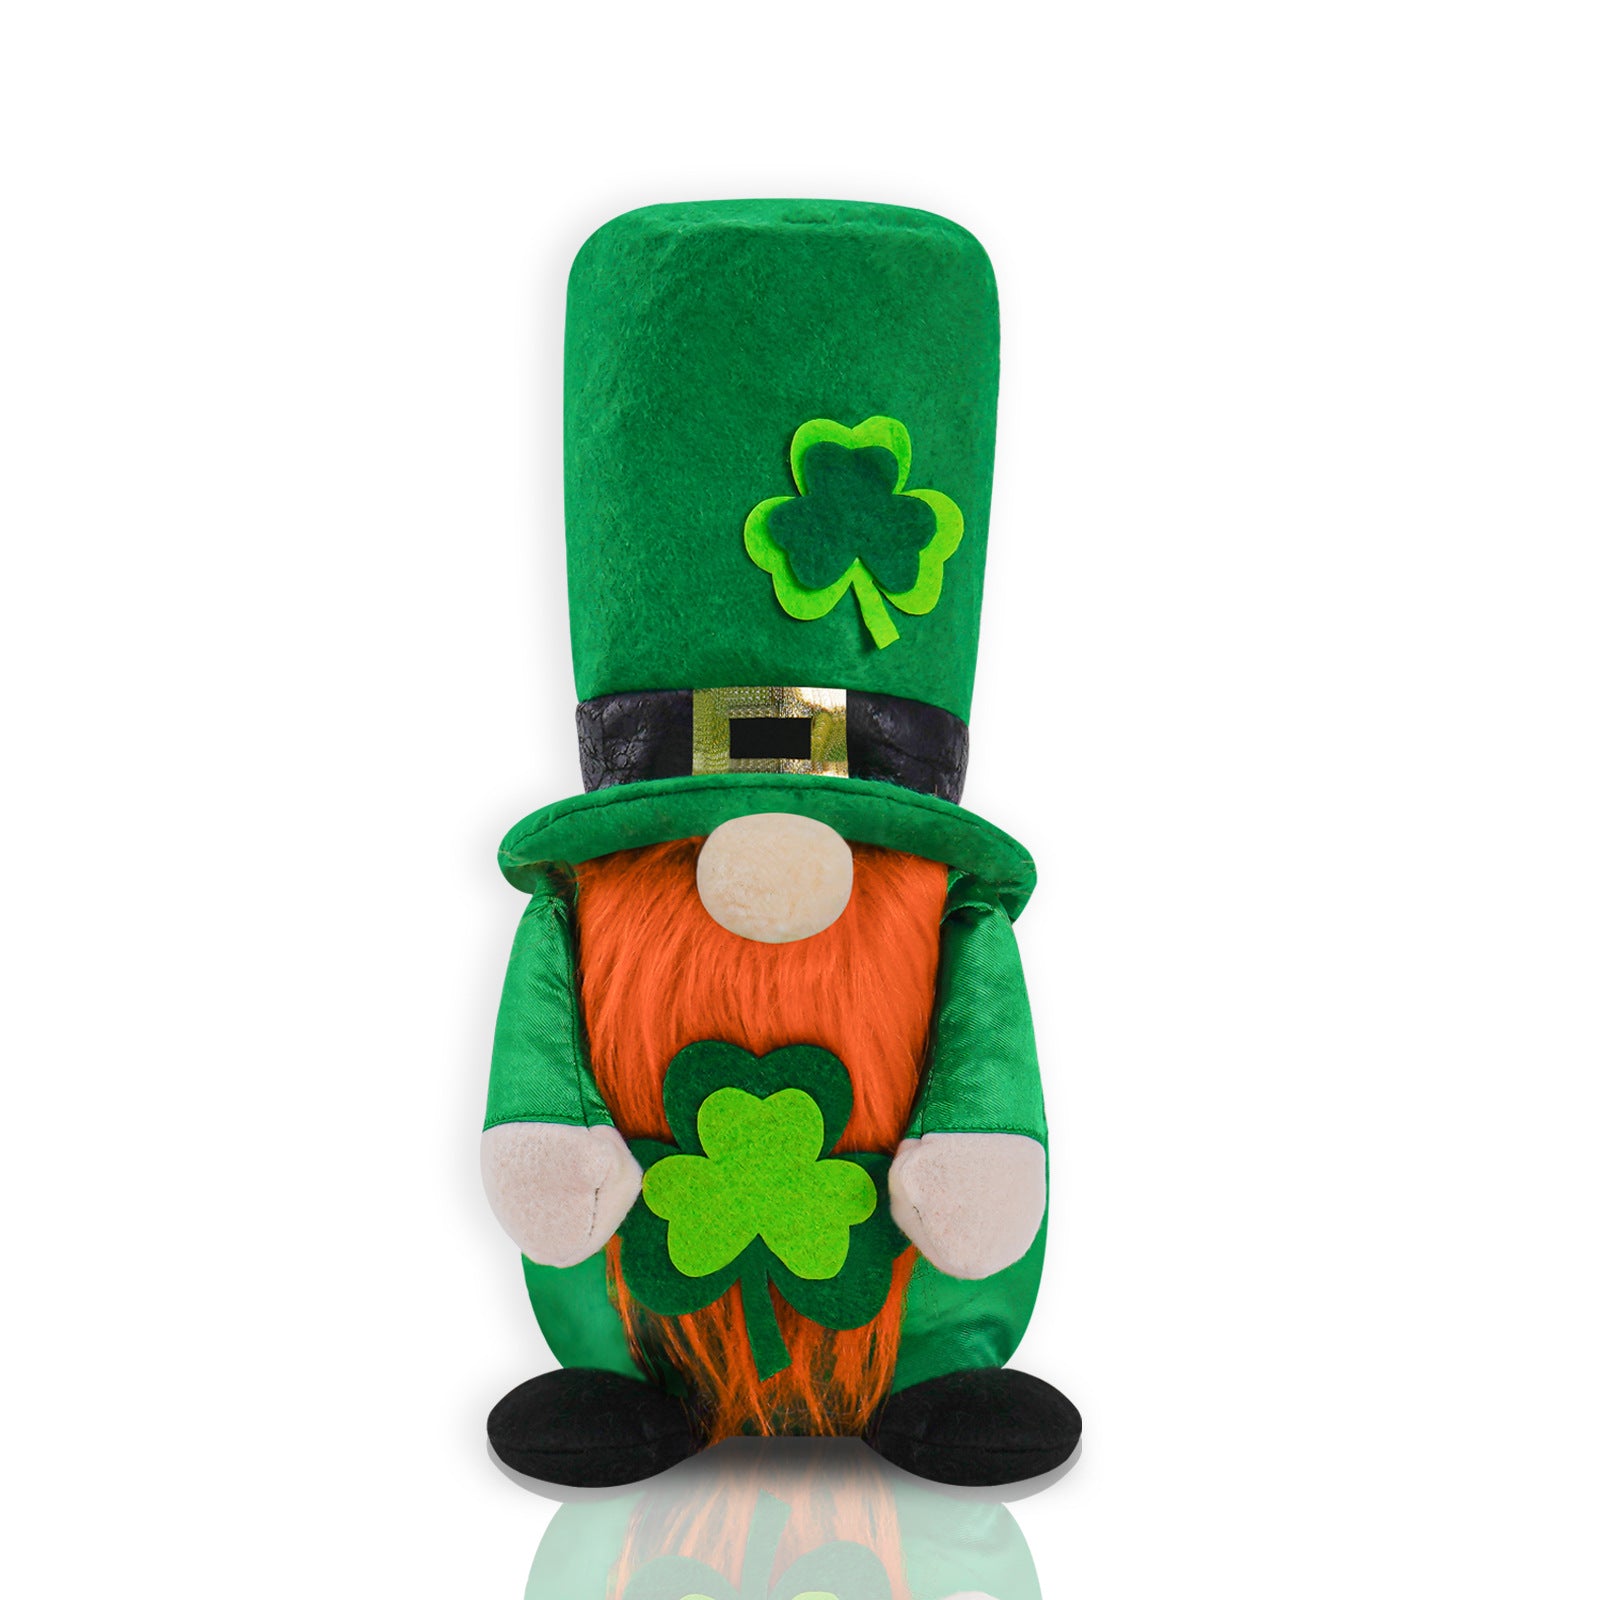 Irish Patrick's Day Decoration Green Little Doll Ornaments